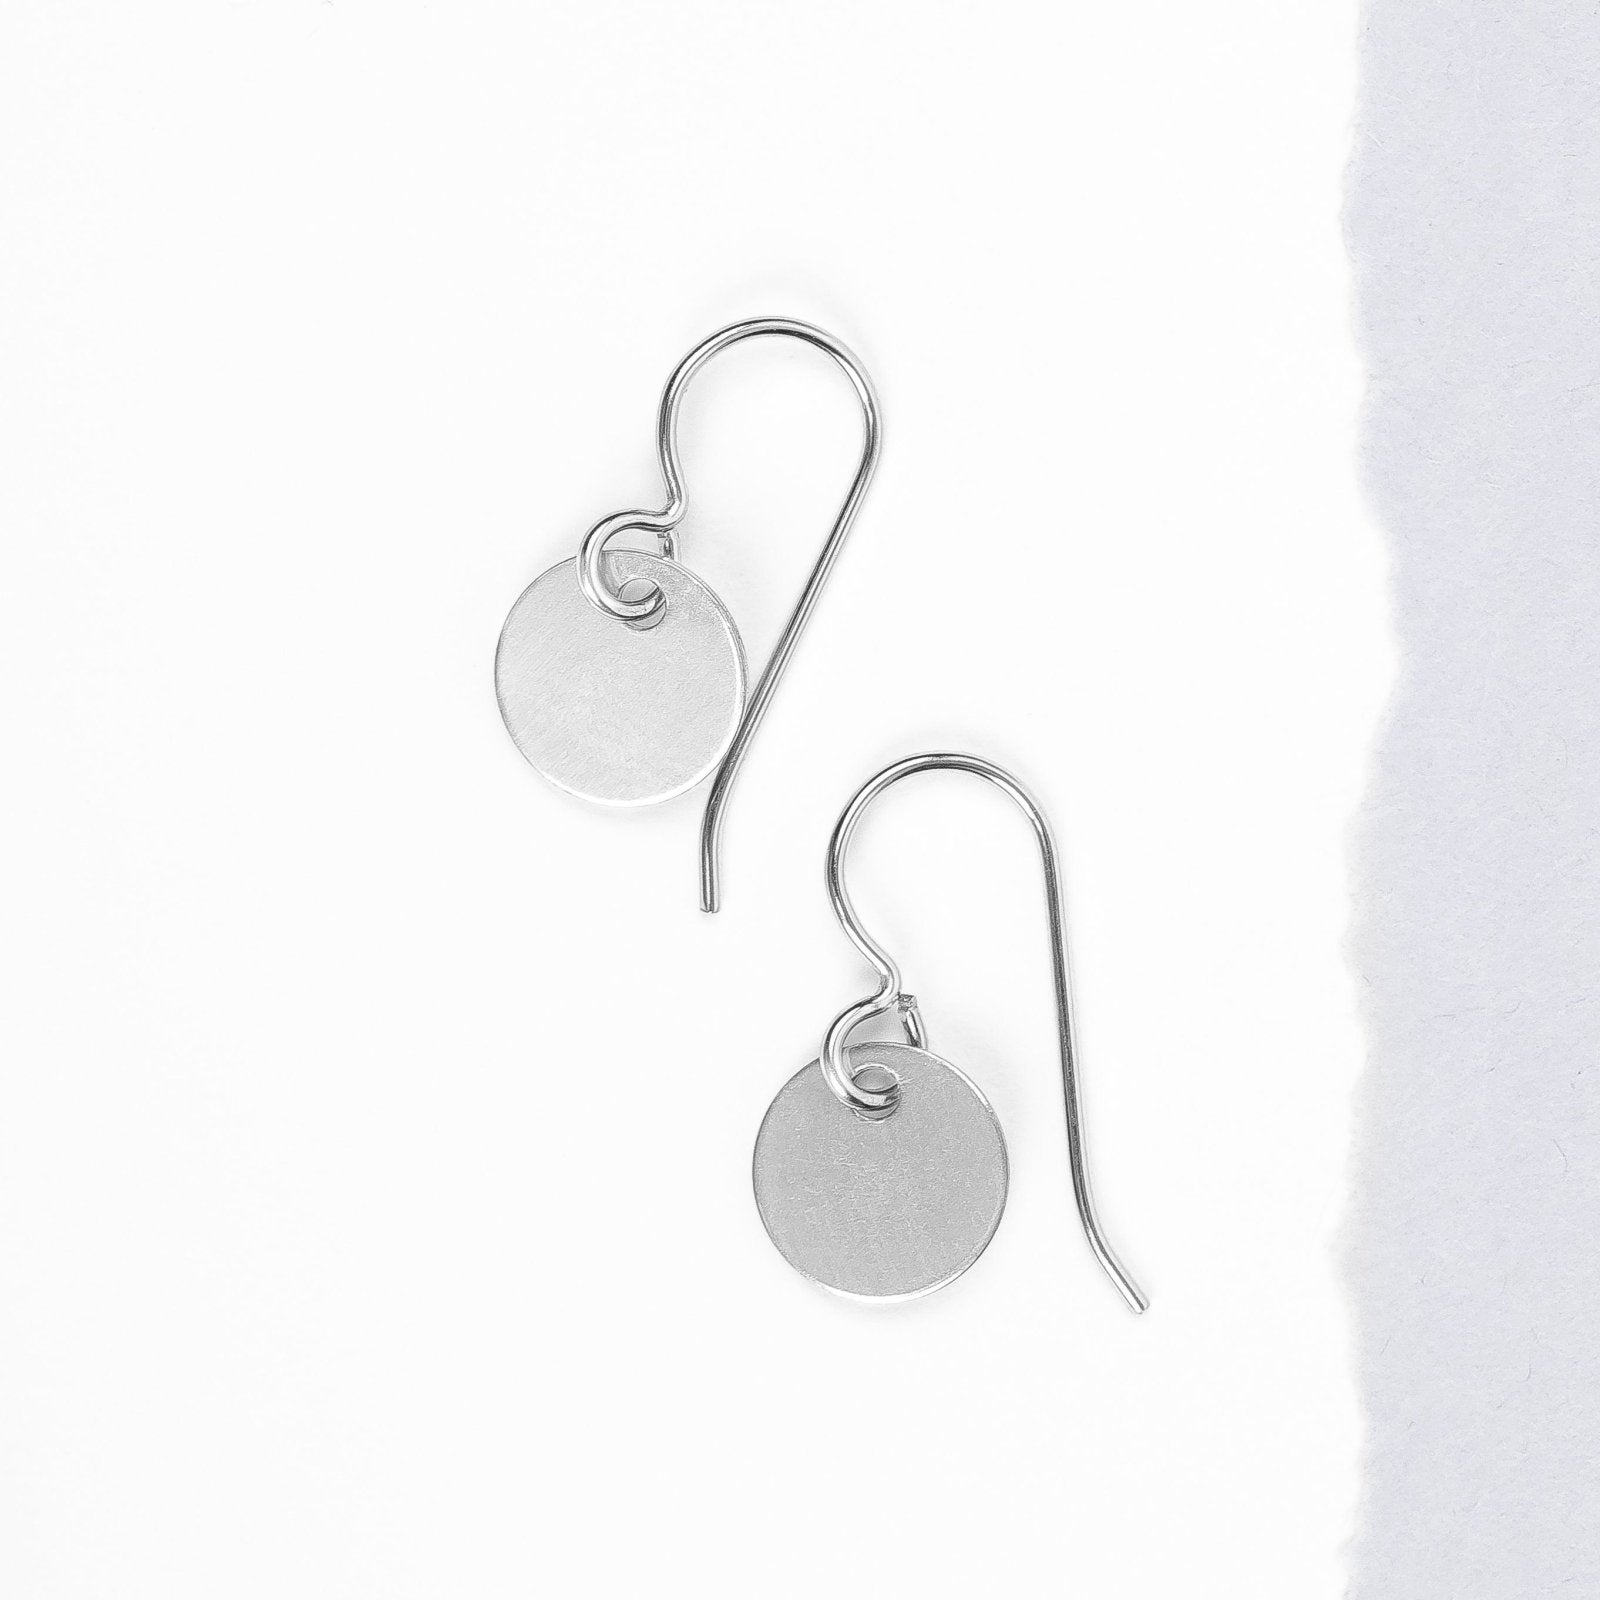 Round Circle Disc Dangle Earrings | Sterling Silver - Melanie Golden Jewelry - dangle earrings, drop earrings, earrings, everyday, everyday essentials, minimal, minimal jewelry, silver